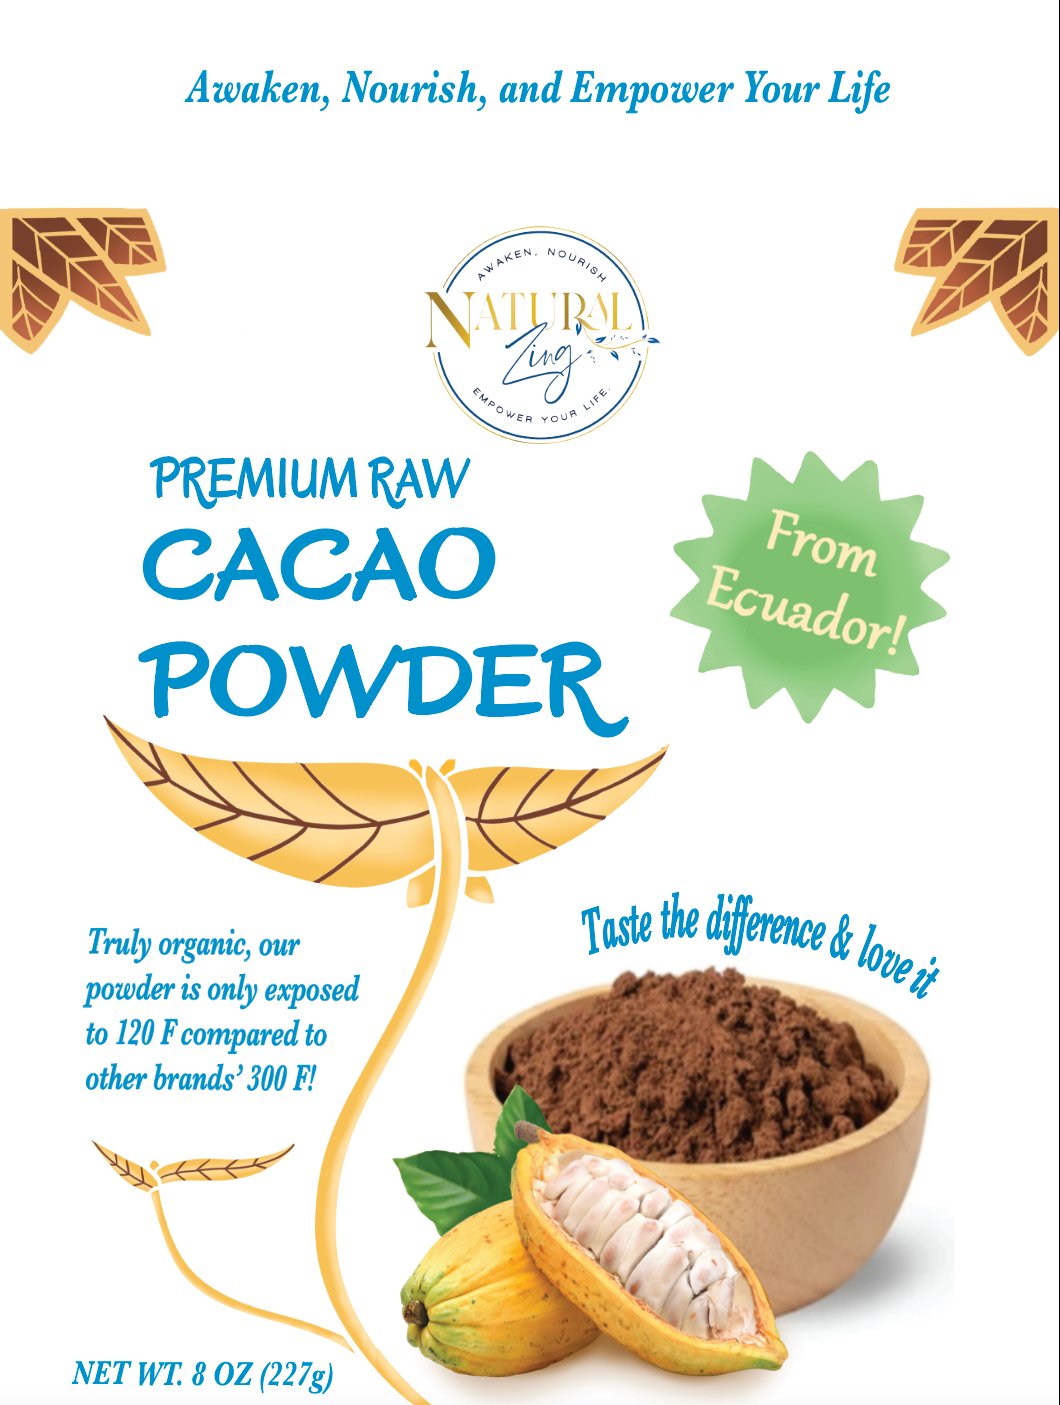 Raw Cacao Powder 8 oz- Criollo - Natural Zing